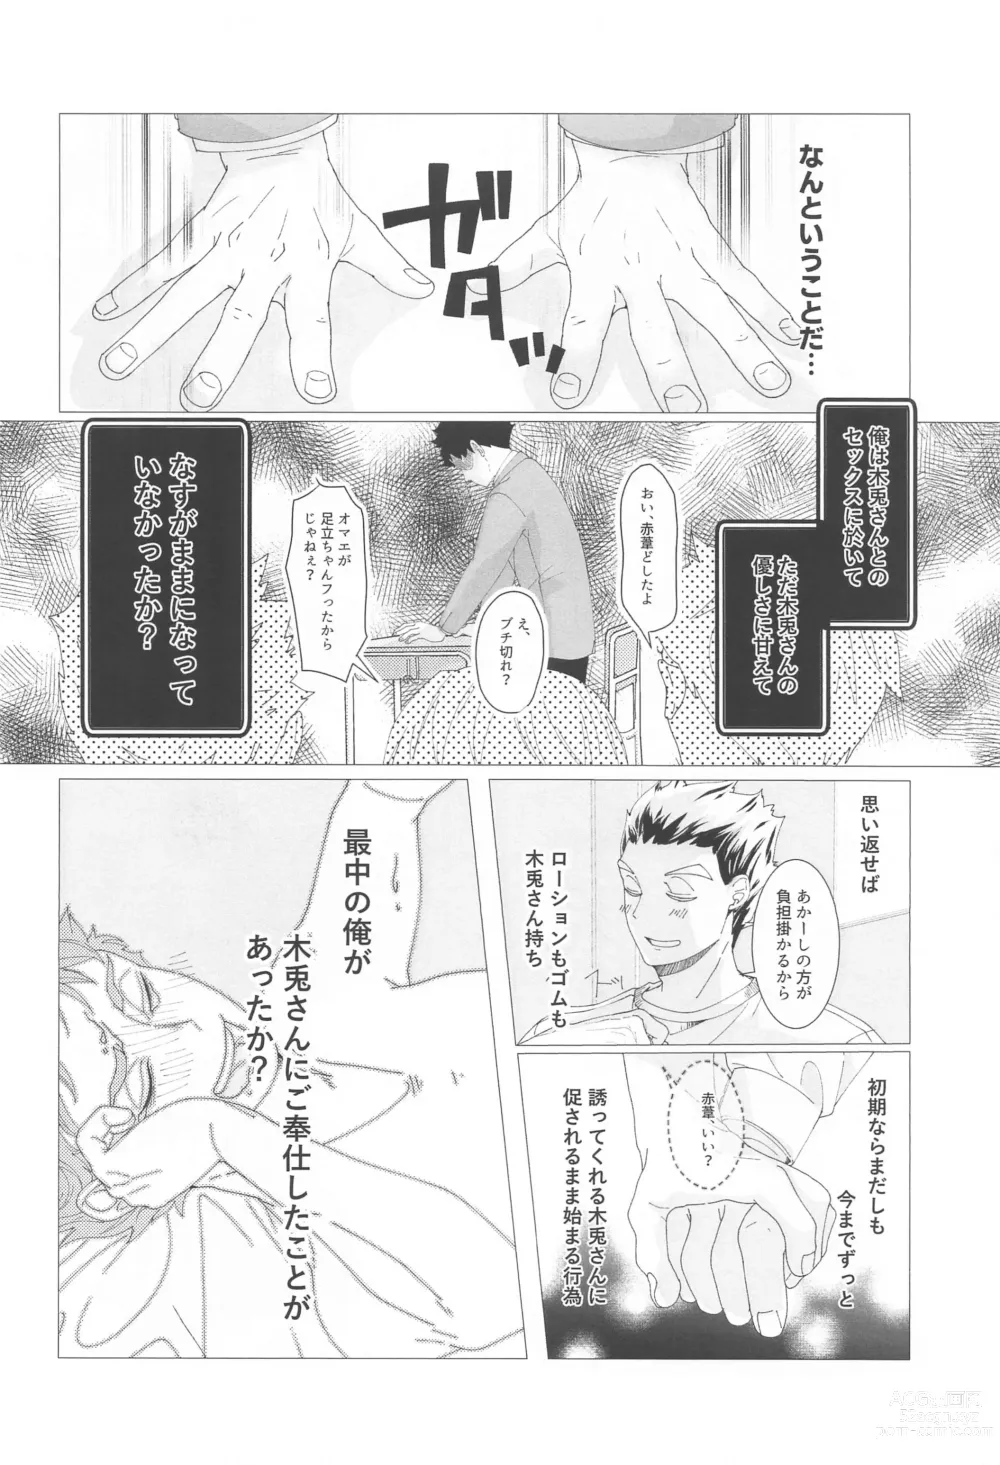 Page 9 of doujinshi Magarinari ni mo Koibito nanode